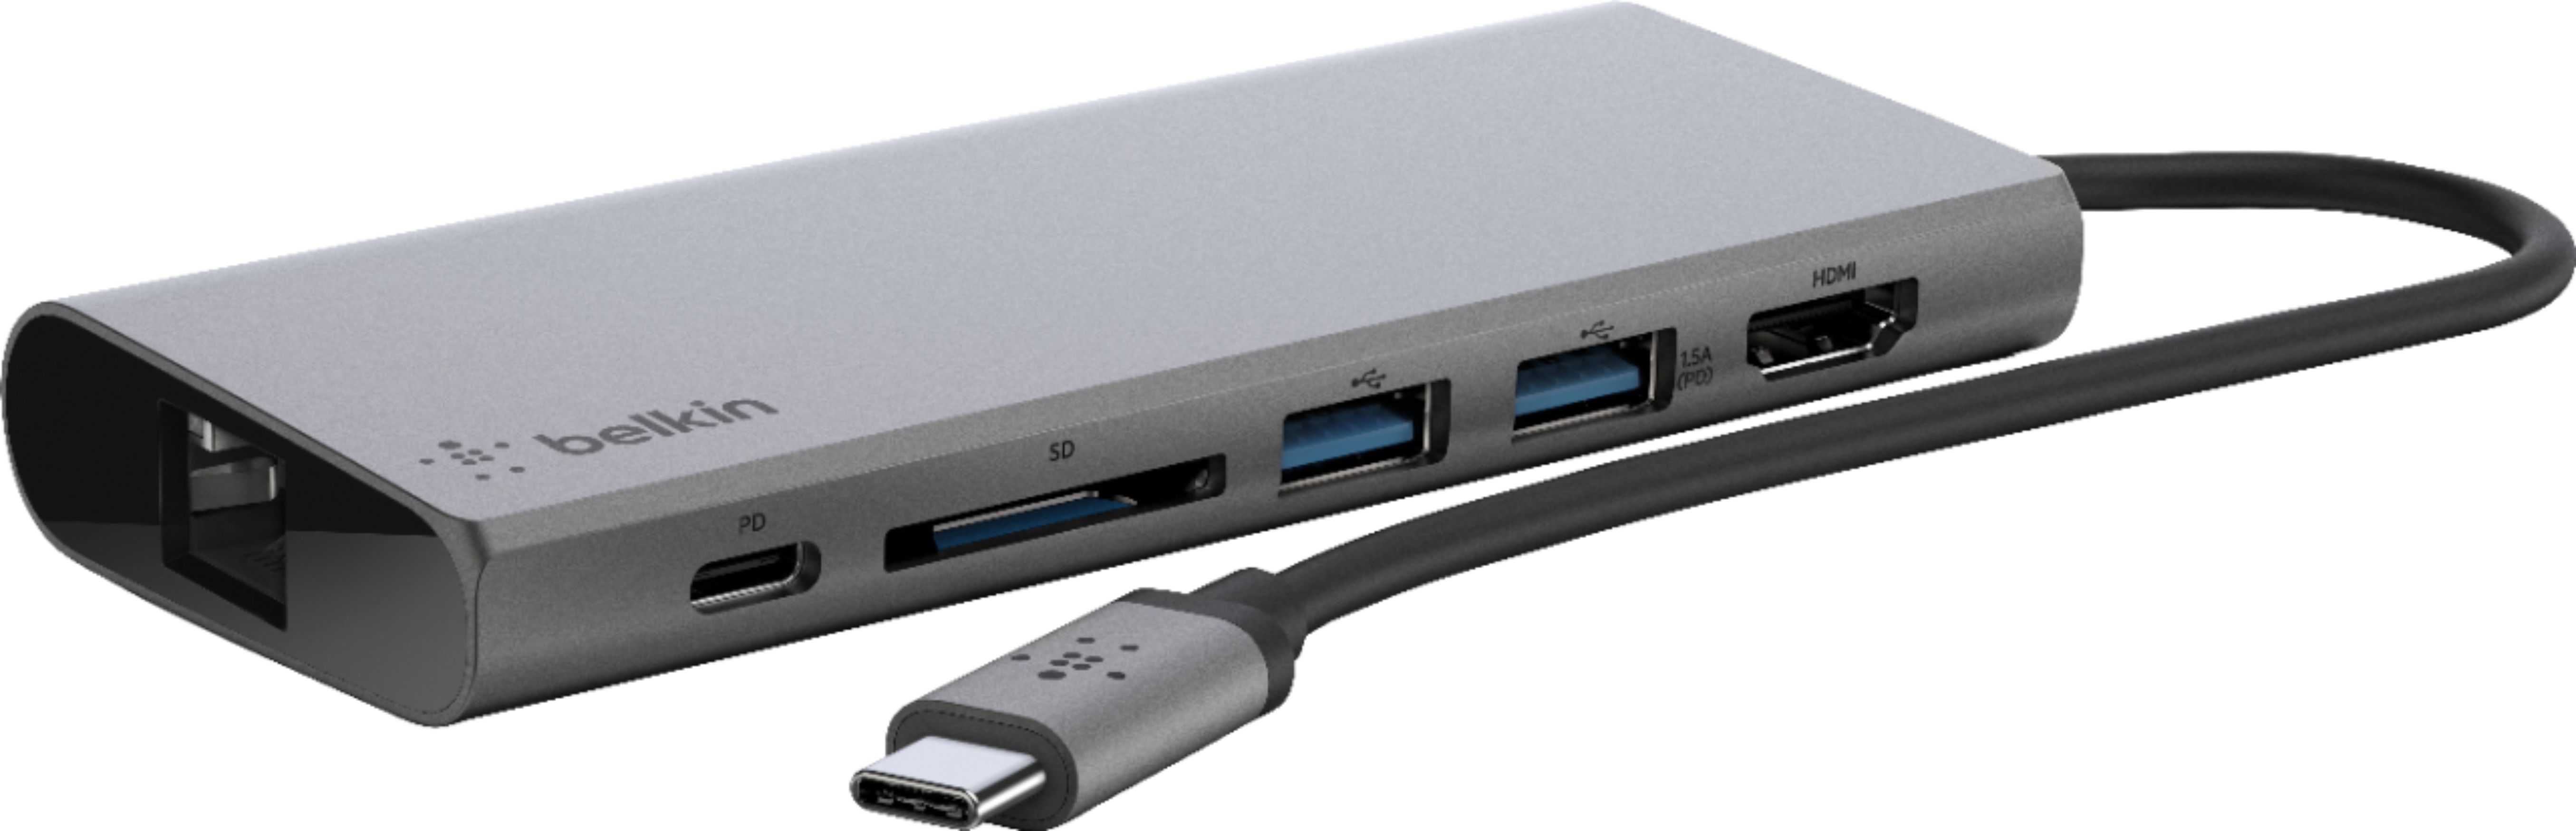 Belkin 4 Port Usb Type C Hub With Gigabit Ethernet Adapter Space